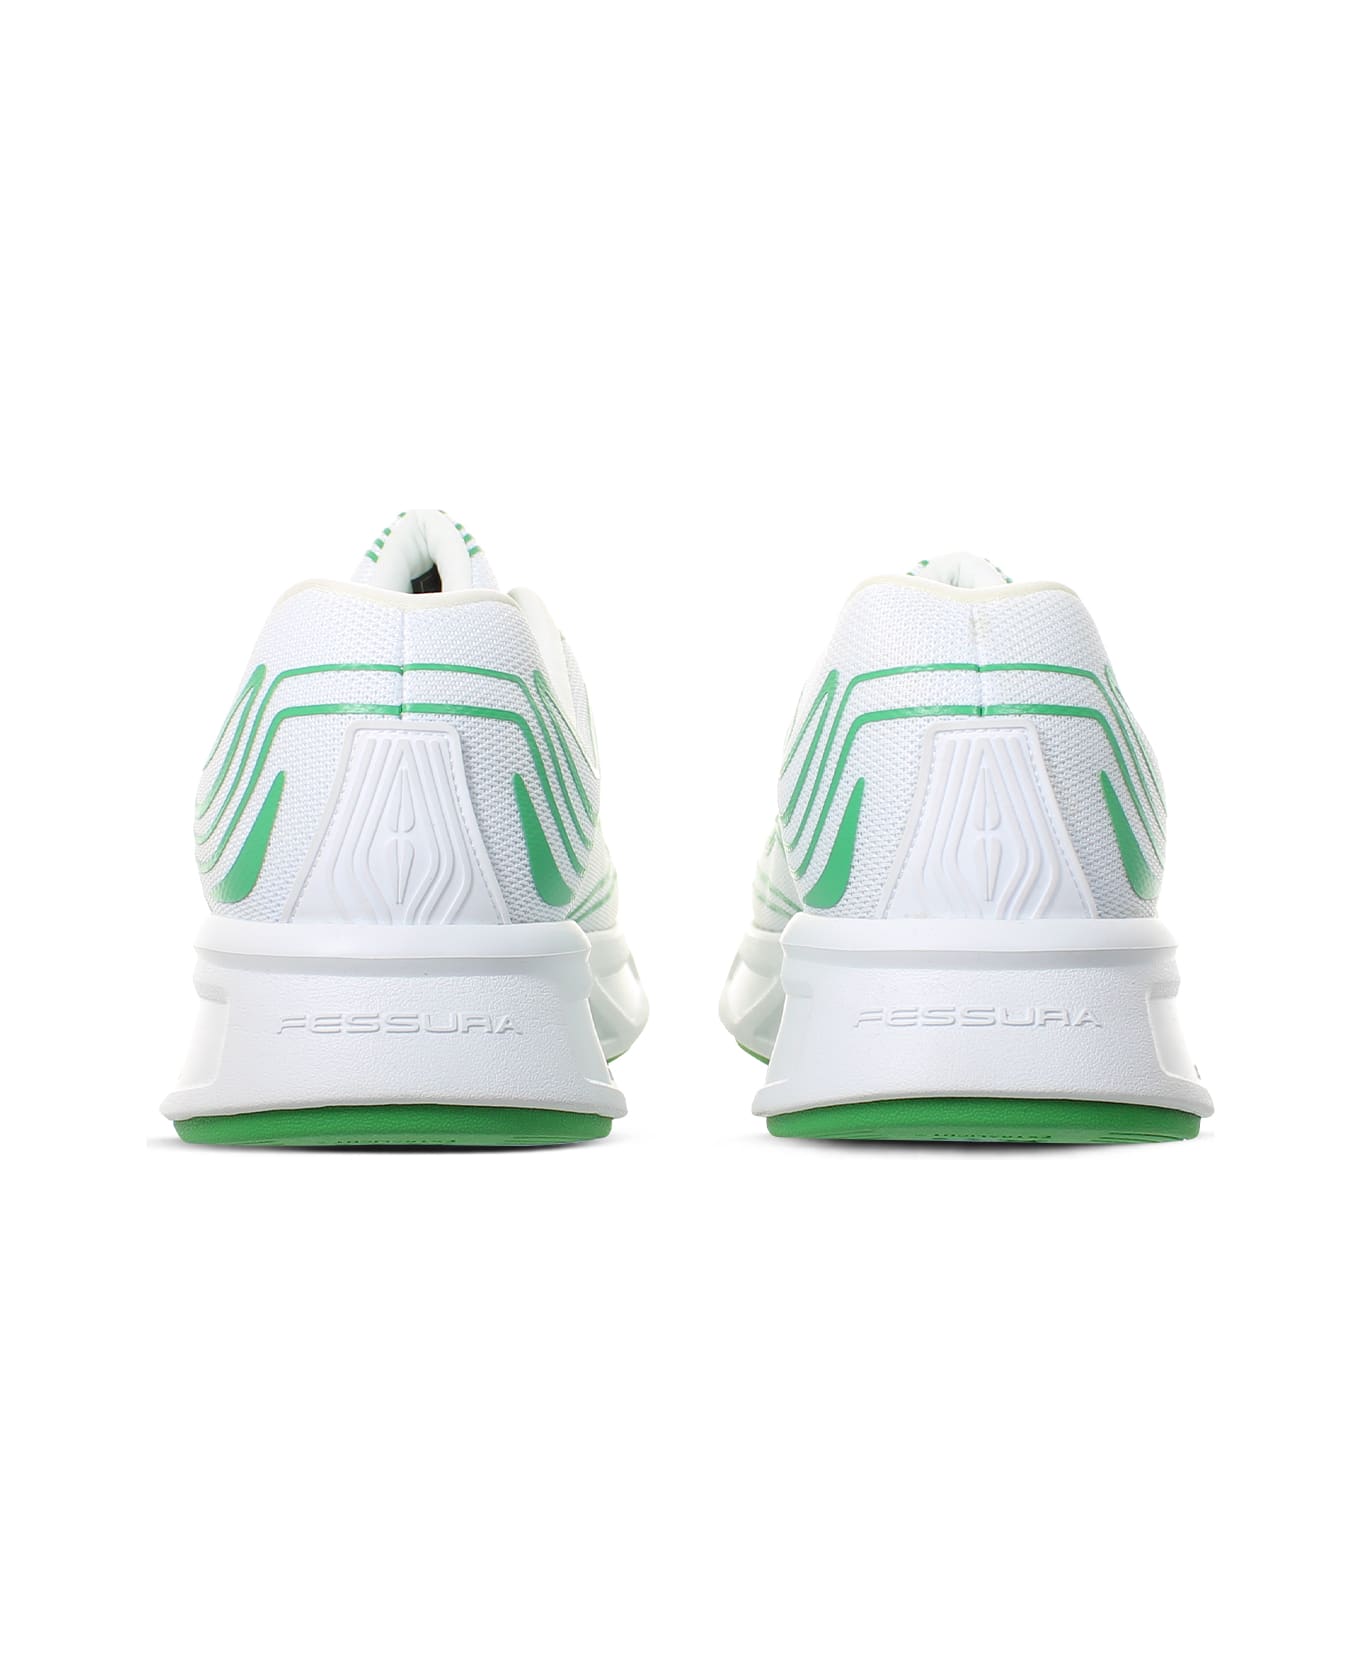 Fessura Runflex #01 - white-green スニーカー